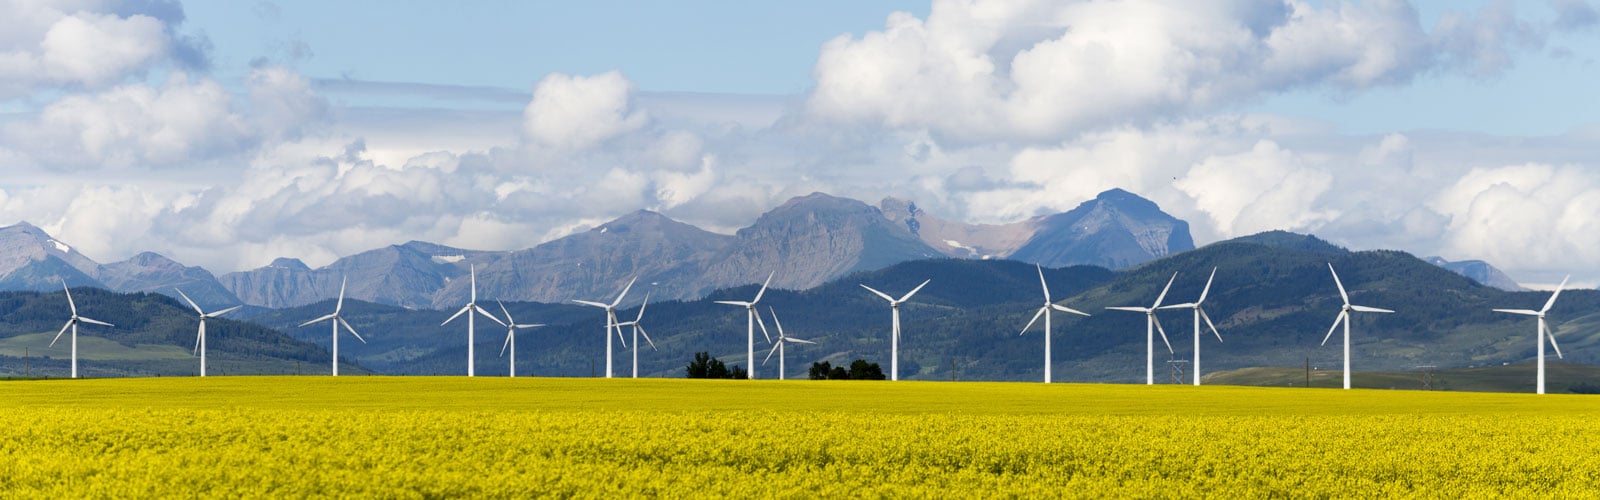 Windmills with mountain backdrop - BLG Alberta Power Market